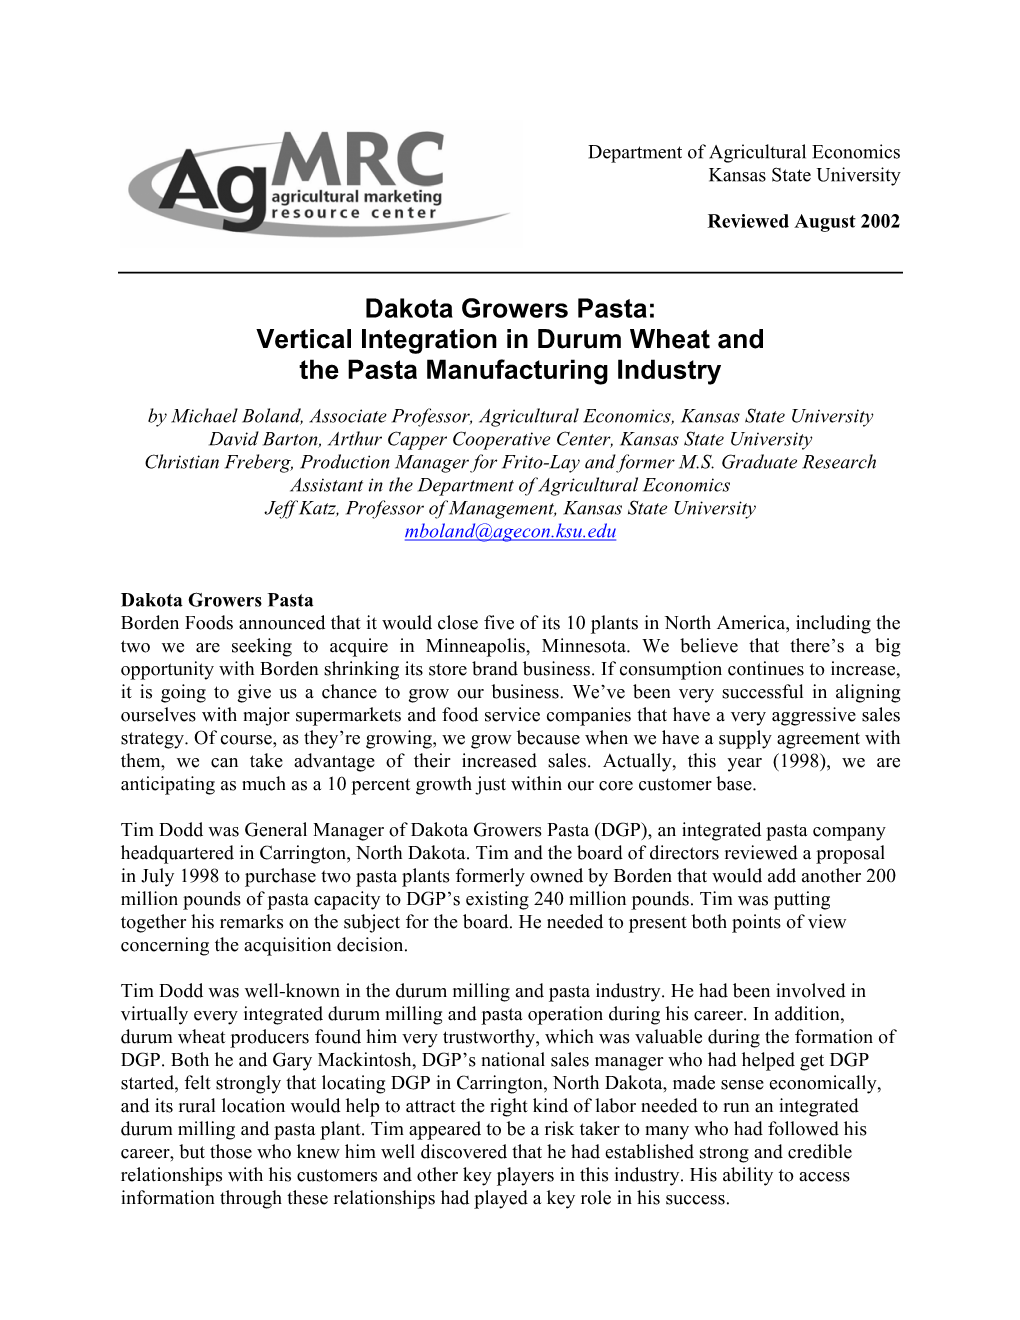 Dakota Growers Pasta: Vertical Integration in Durum Wheat and the Pasta Manufacturing Industry